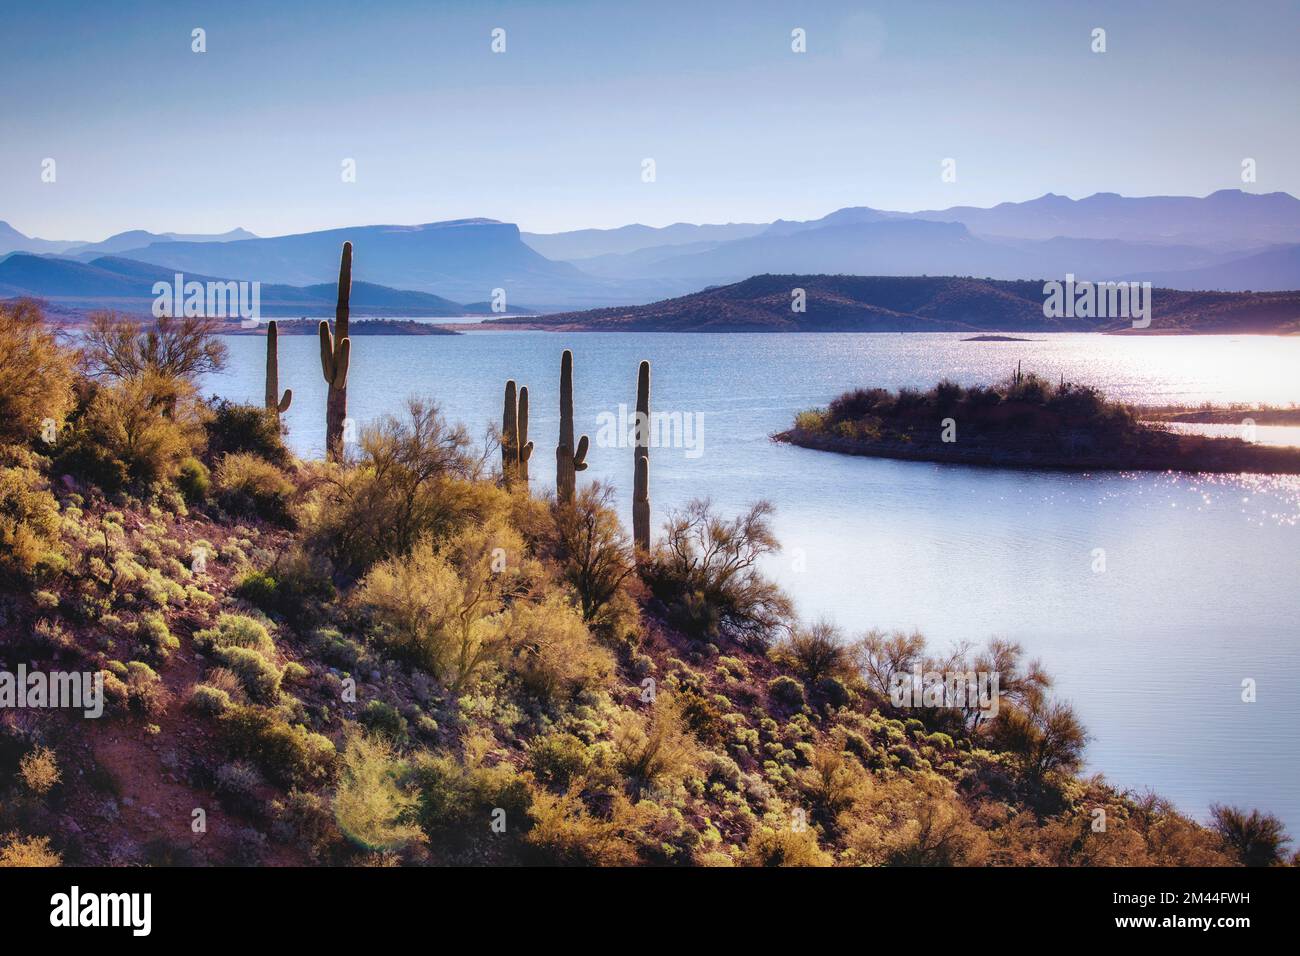 The Sonoran Desert runs to the edges of Theodore Roosevelt Lake in Arizona. Stock Photo